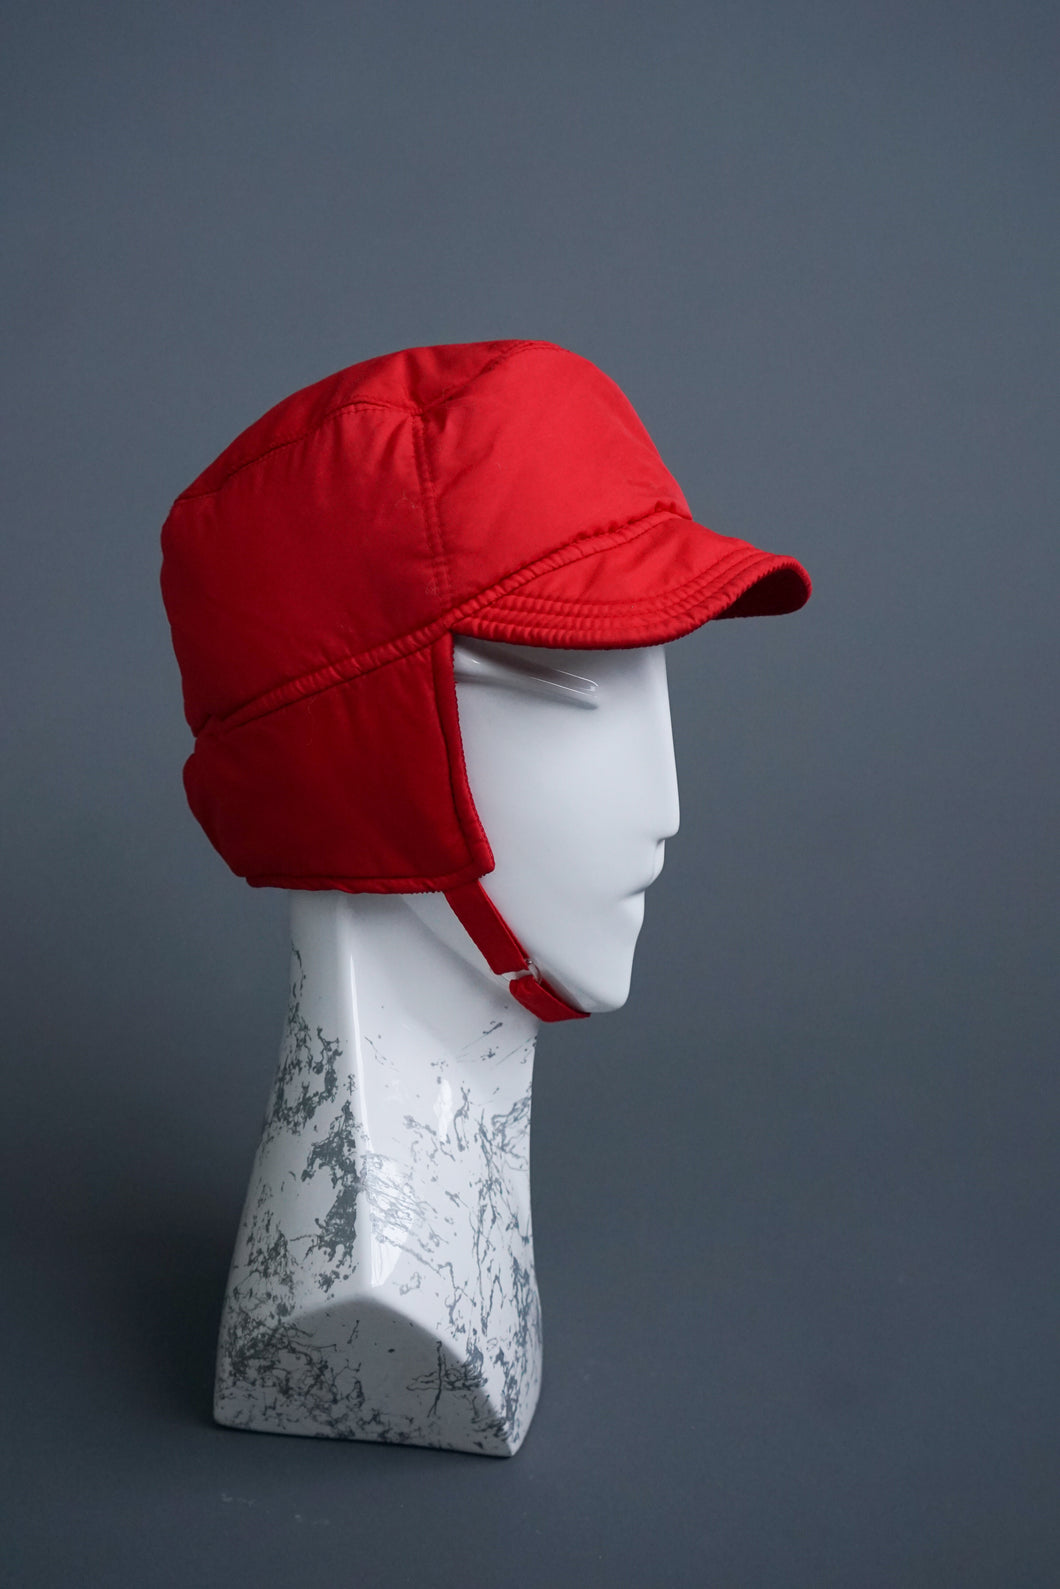 Vintage red ear warmer cap